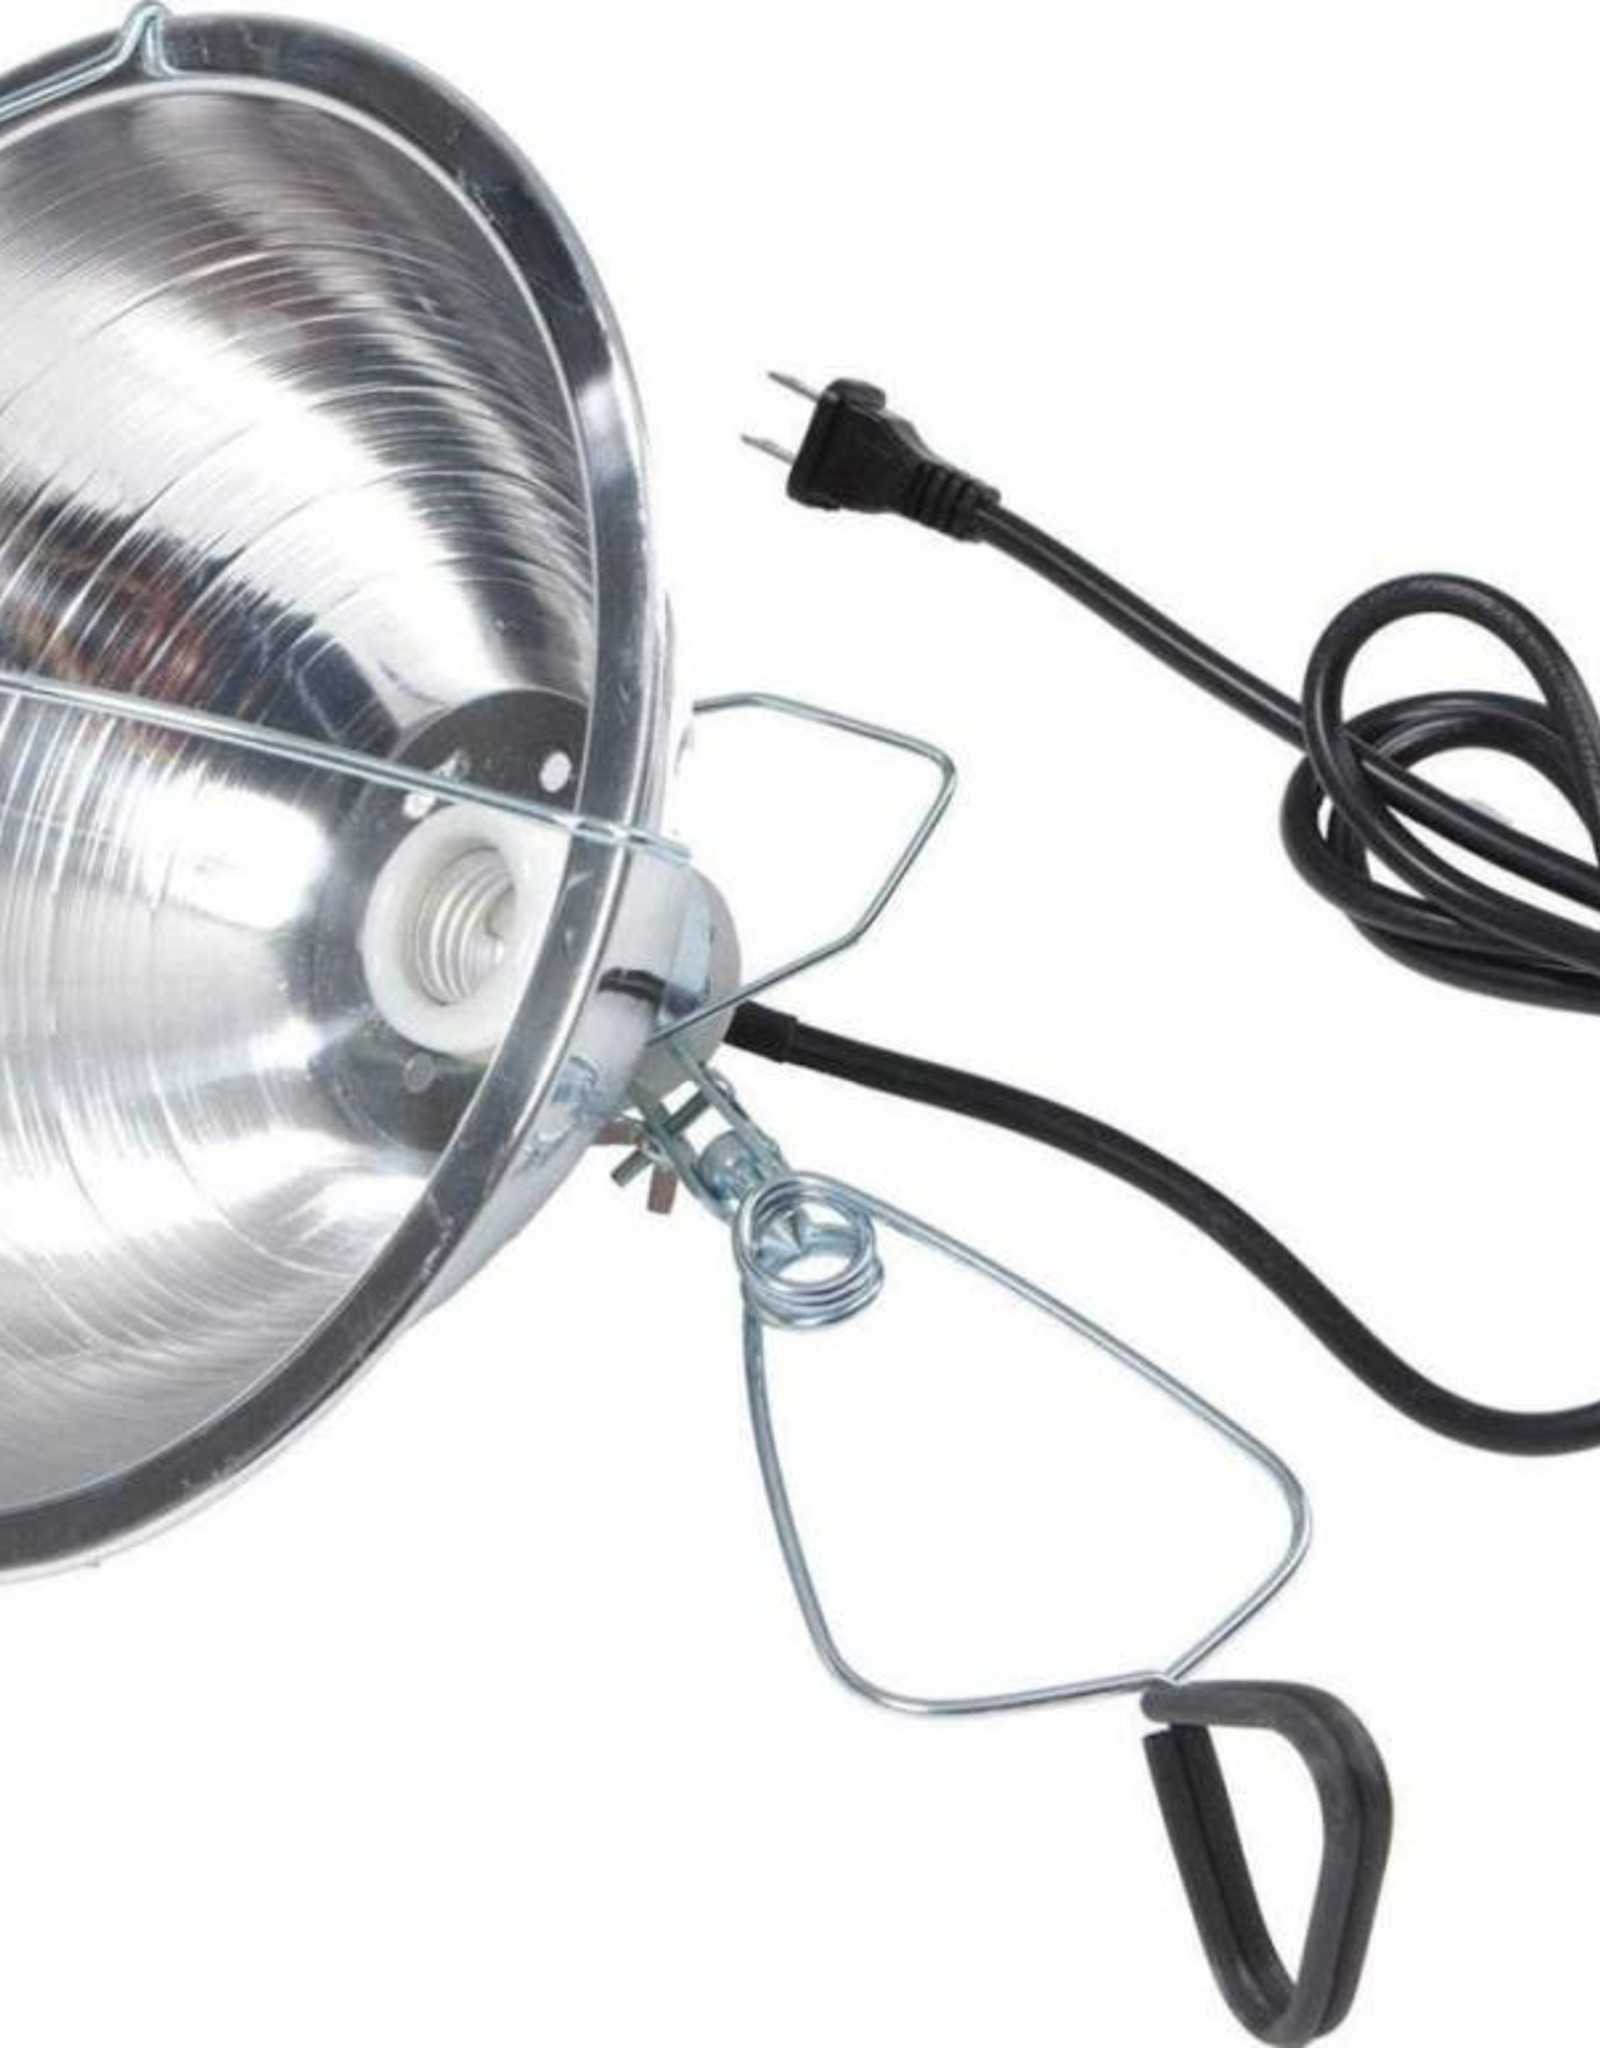 MILLER MFG CO INC BROODER Lamp REFLECTOR W CLAMP 10.5"